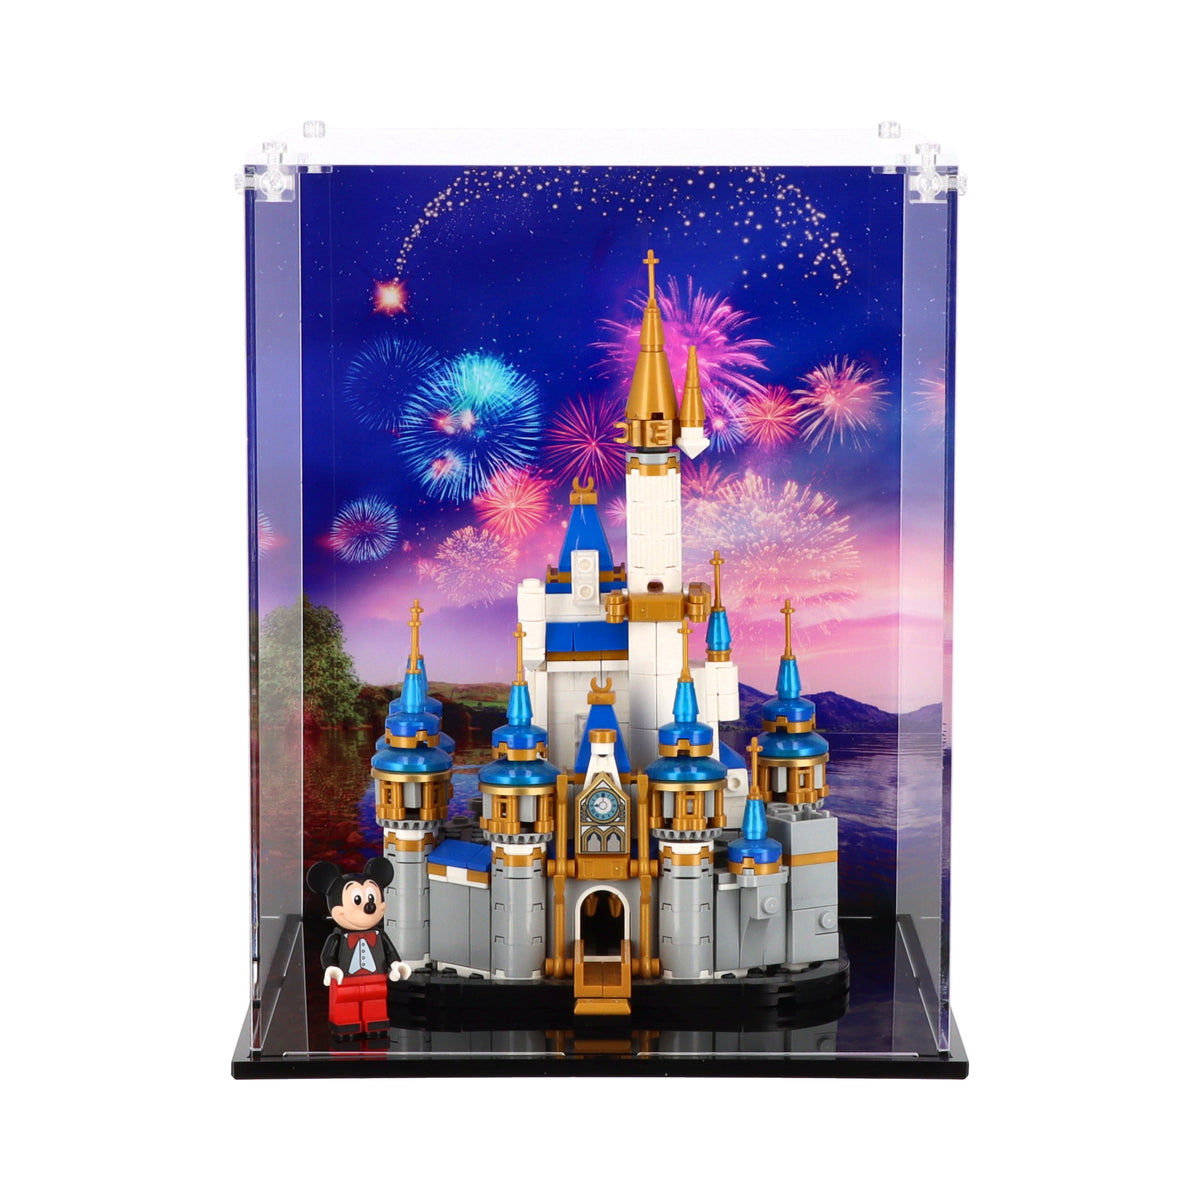 Lego 40478 Mini Disney Castle Display Case